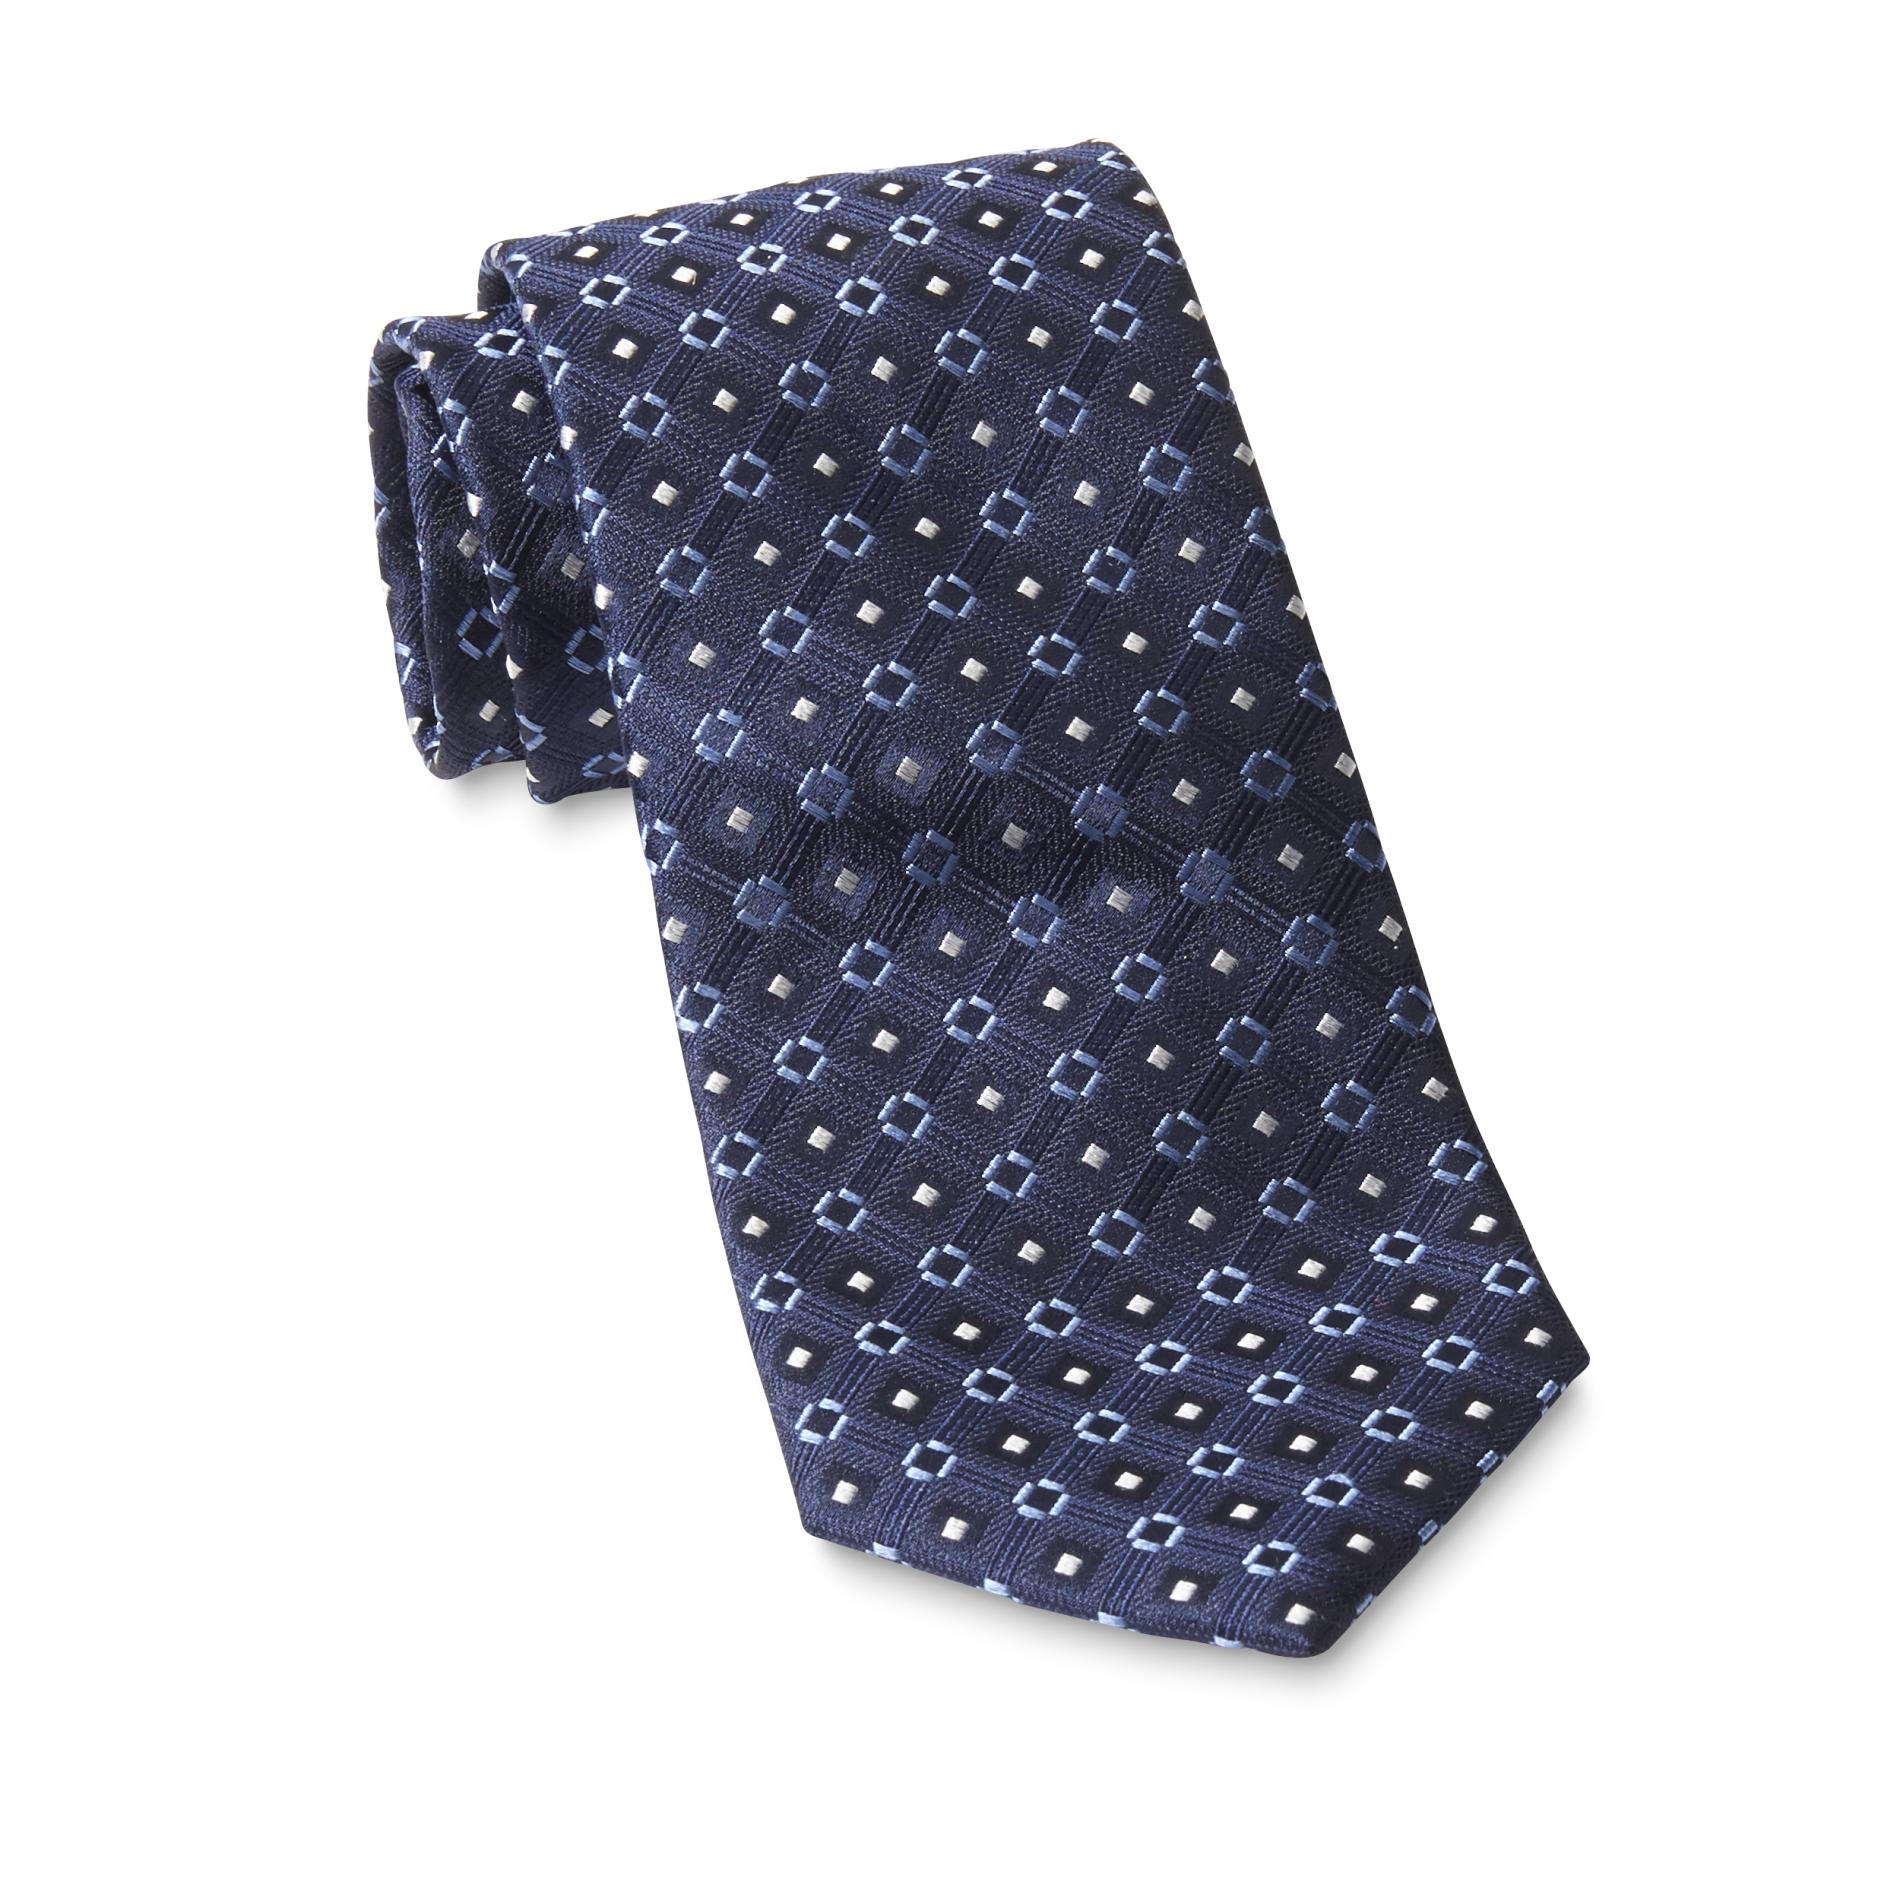 Covington Men's Necktie - Geometric